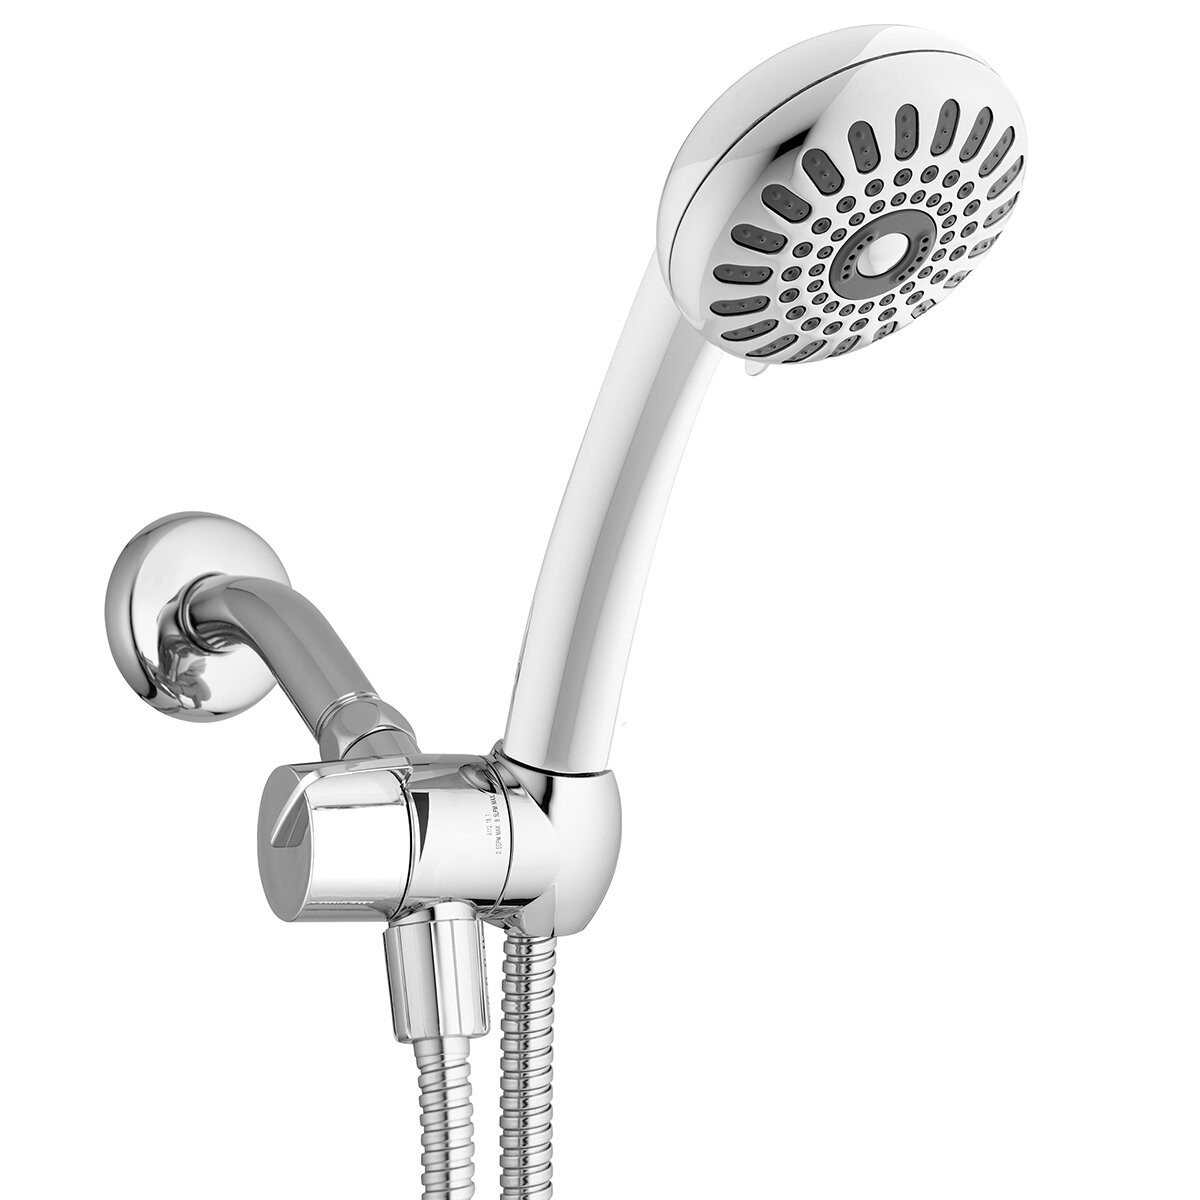 Waterpik Power Spray And Hand Held Shower Head | Costco A...